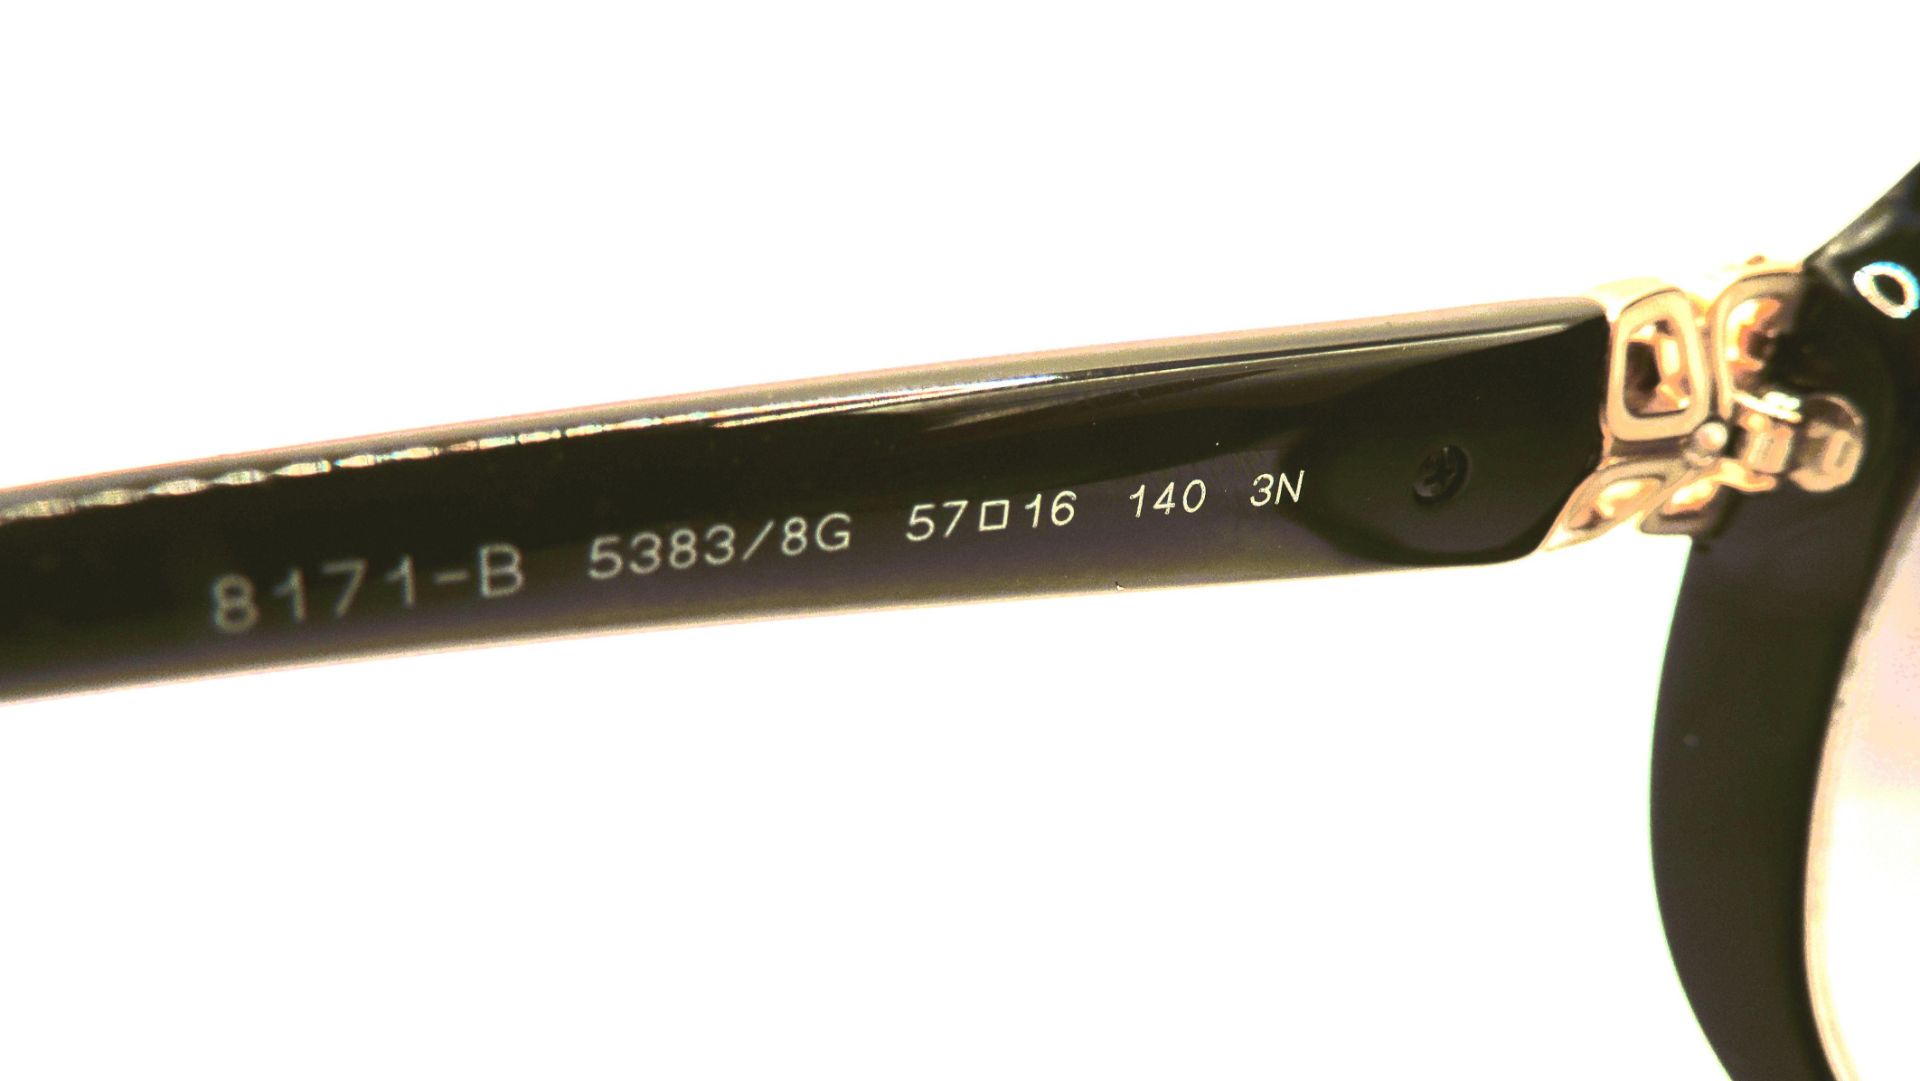 BVLGARI Black Sunglasses 8171-C Jewelled Hinged Detail New With Box & Certificate - Image 13 of 17